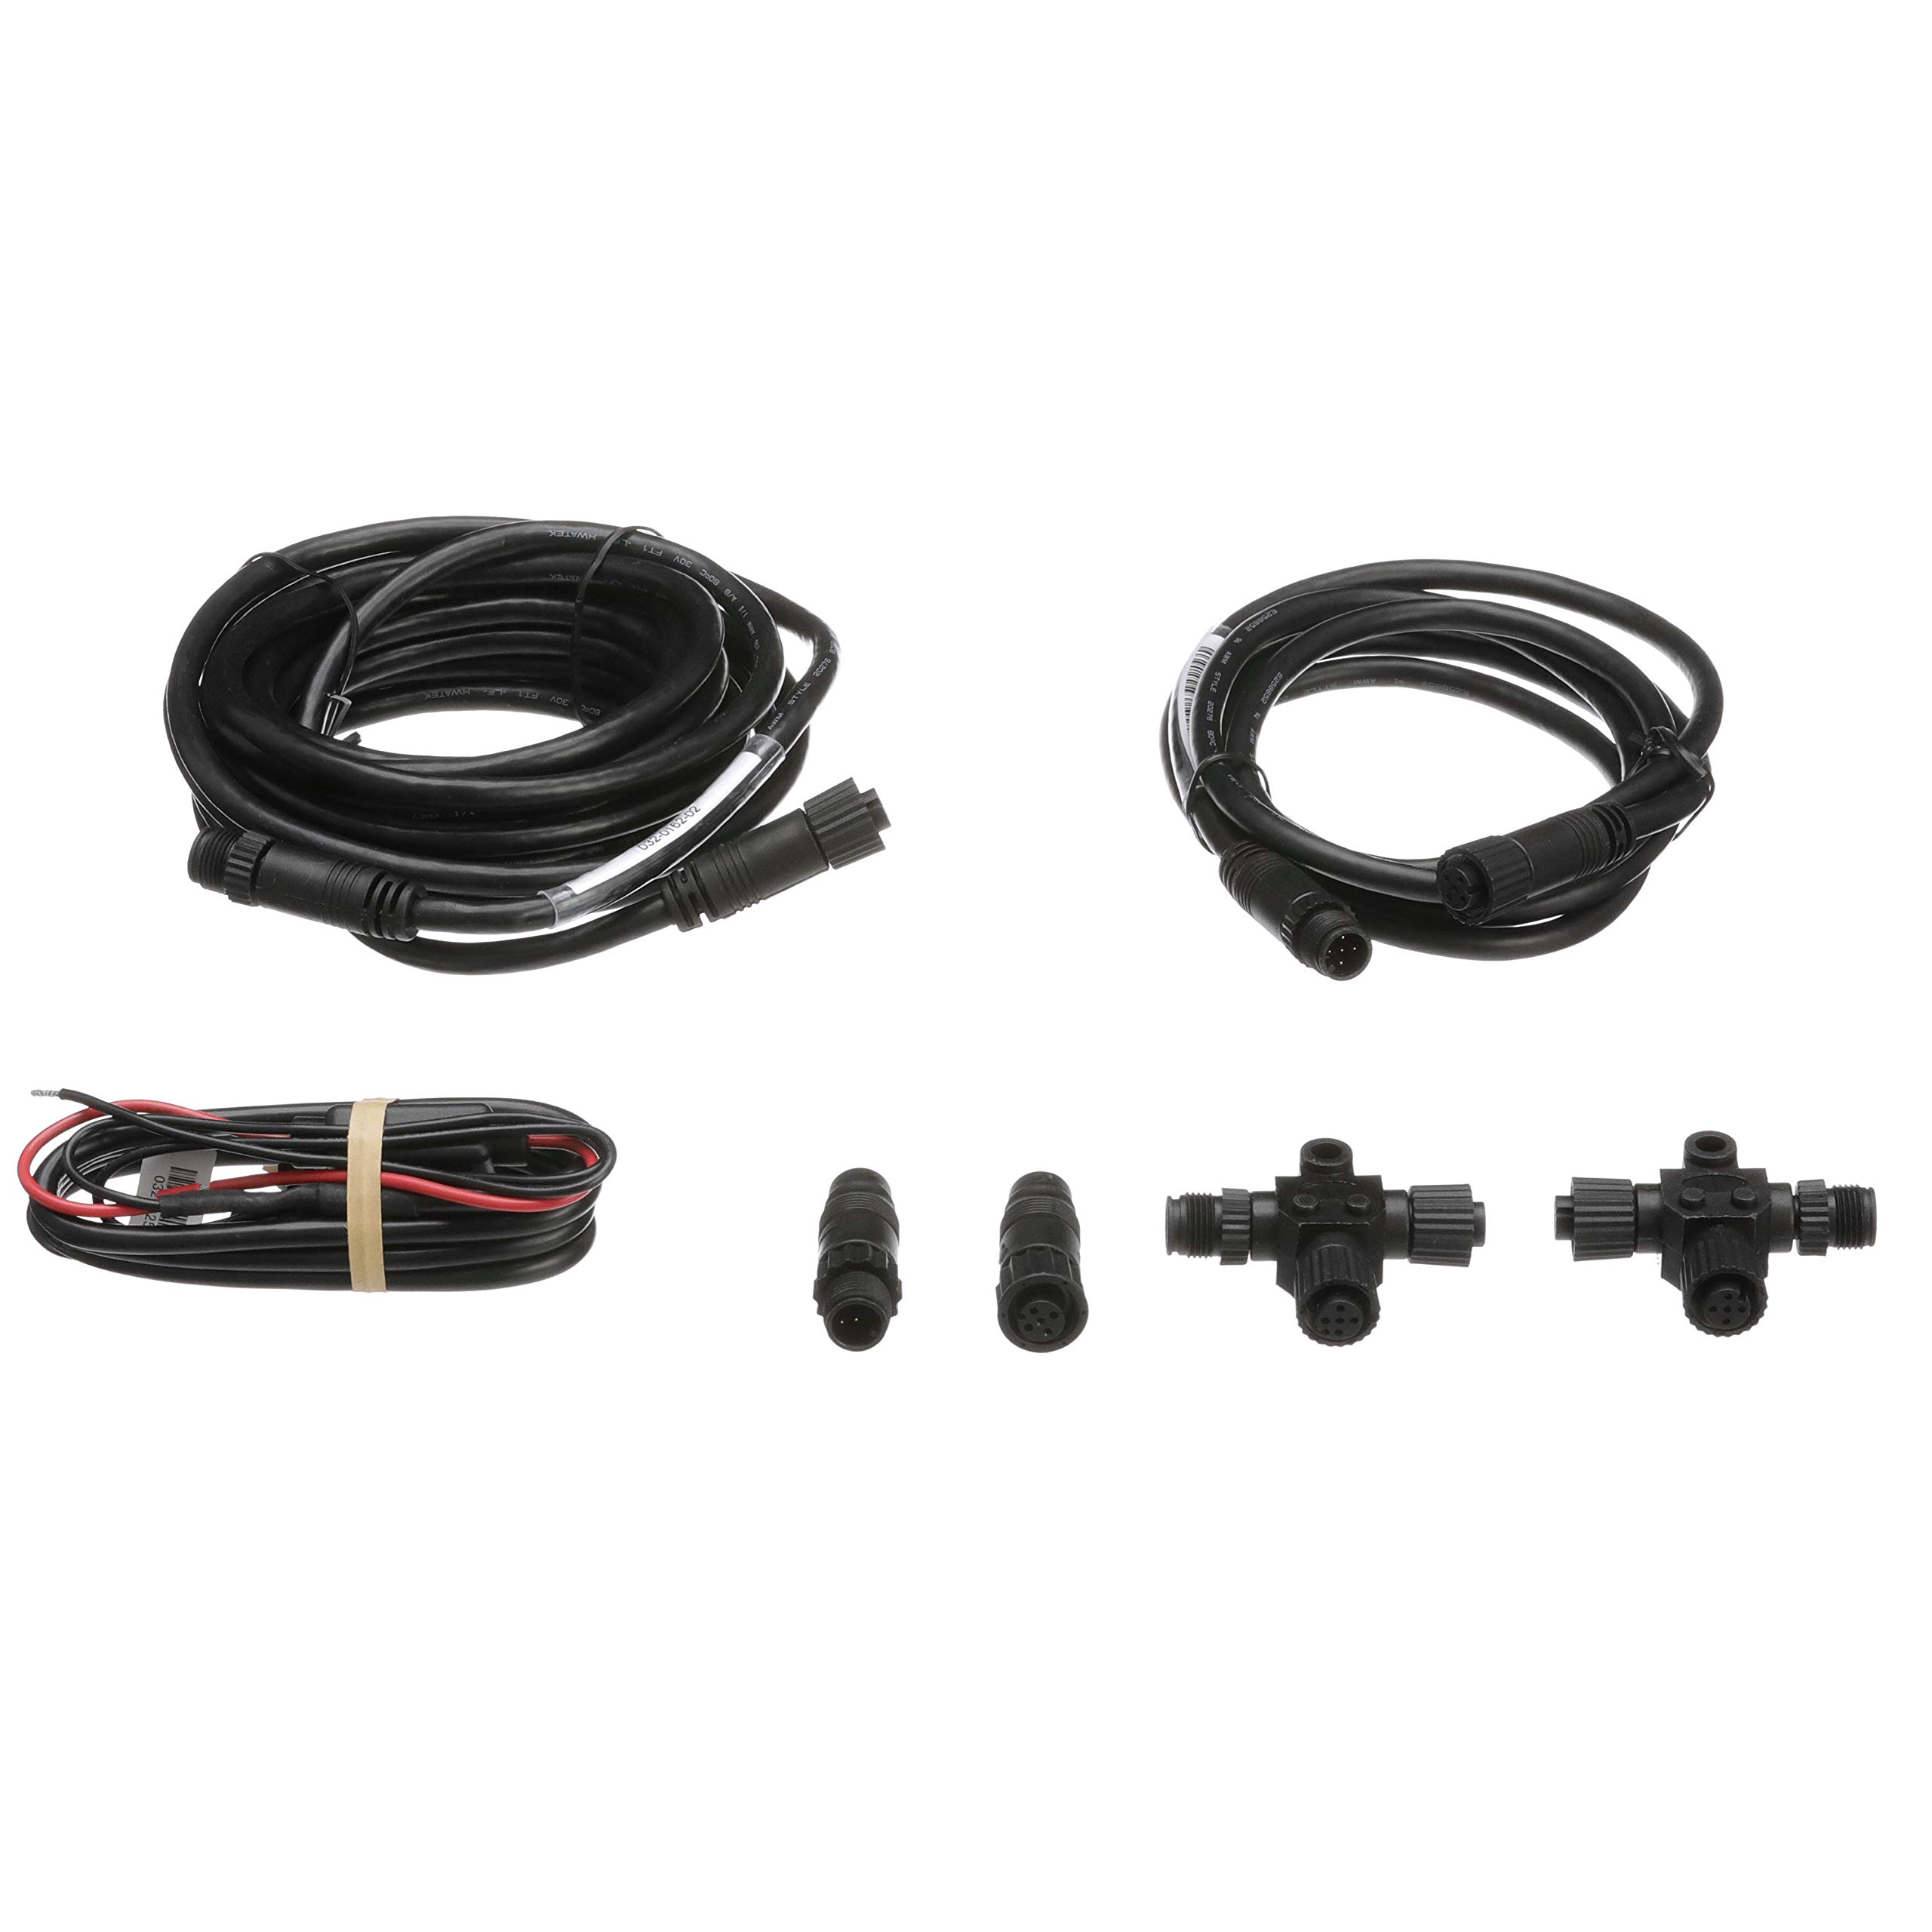 MotorGuide Pinpoint GPS NMEA2000 Starter Kit, Black